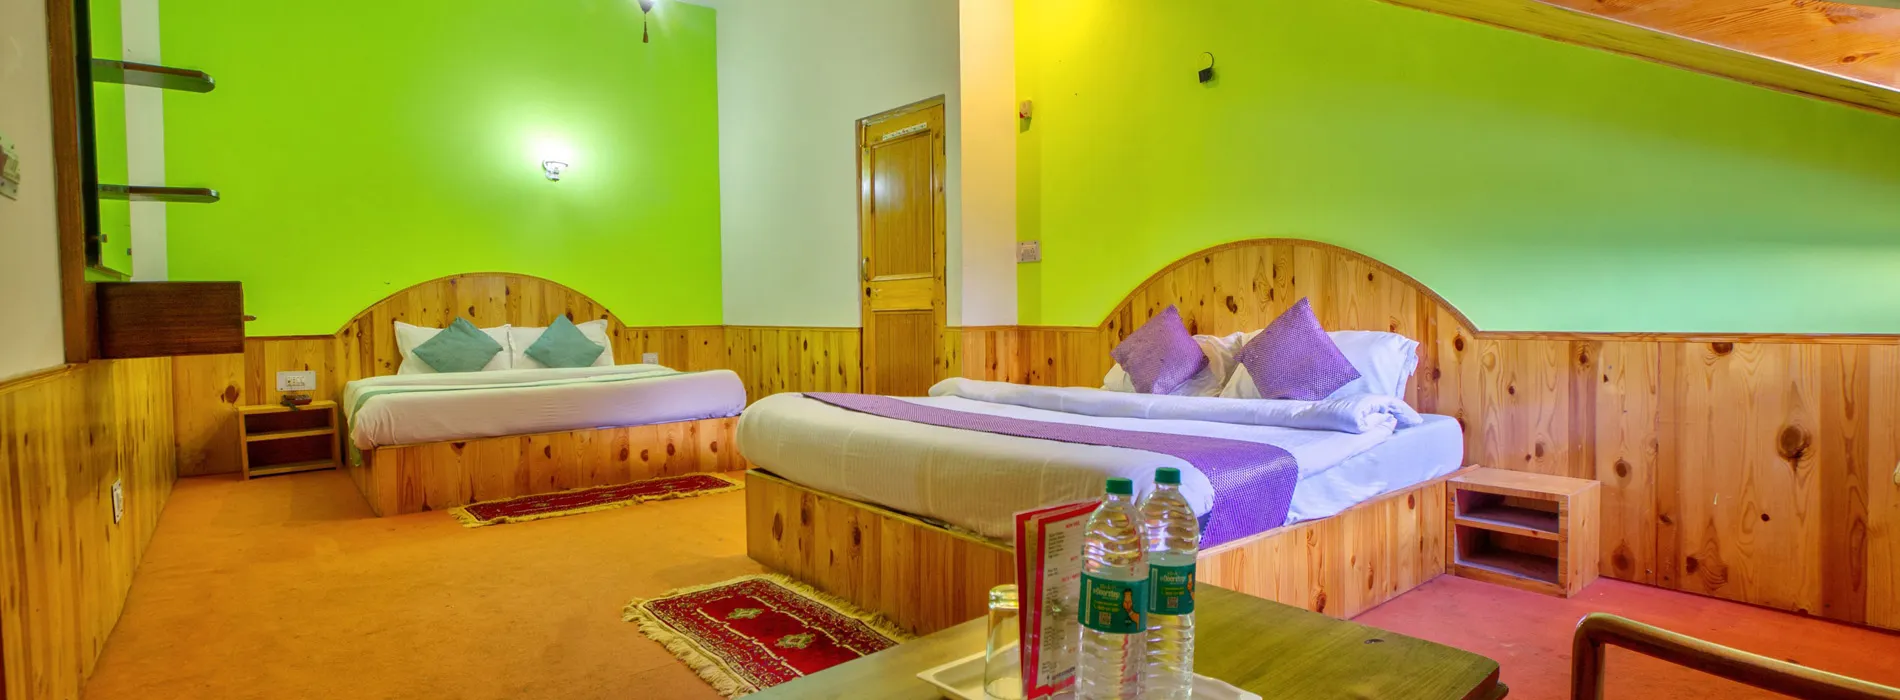 Best hotel in Manali